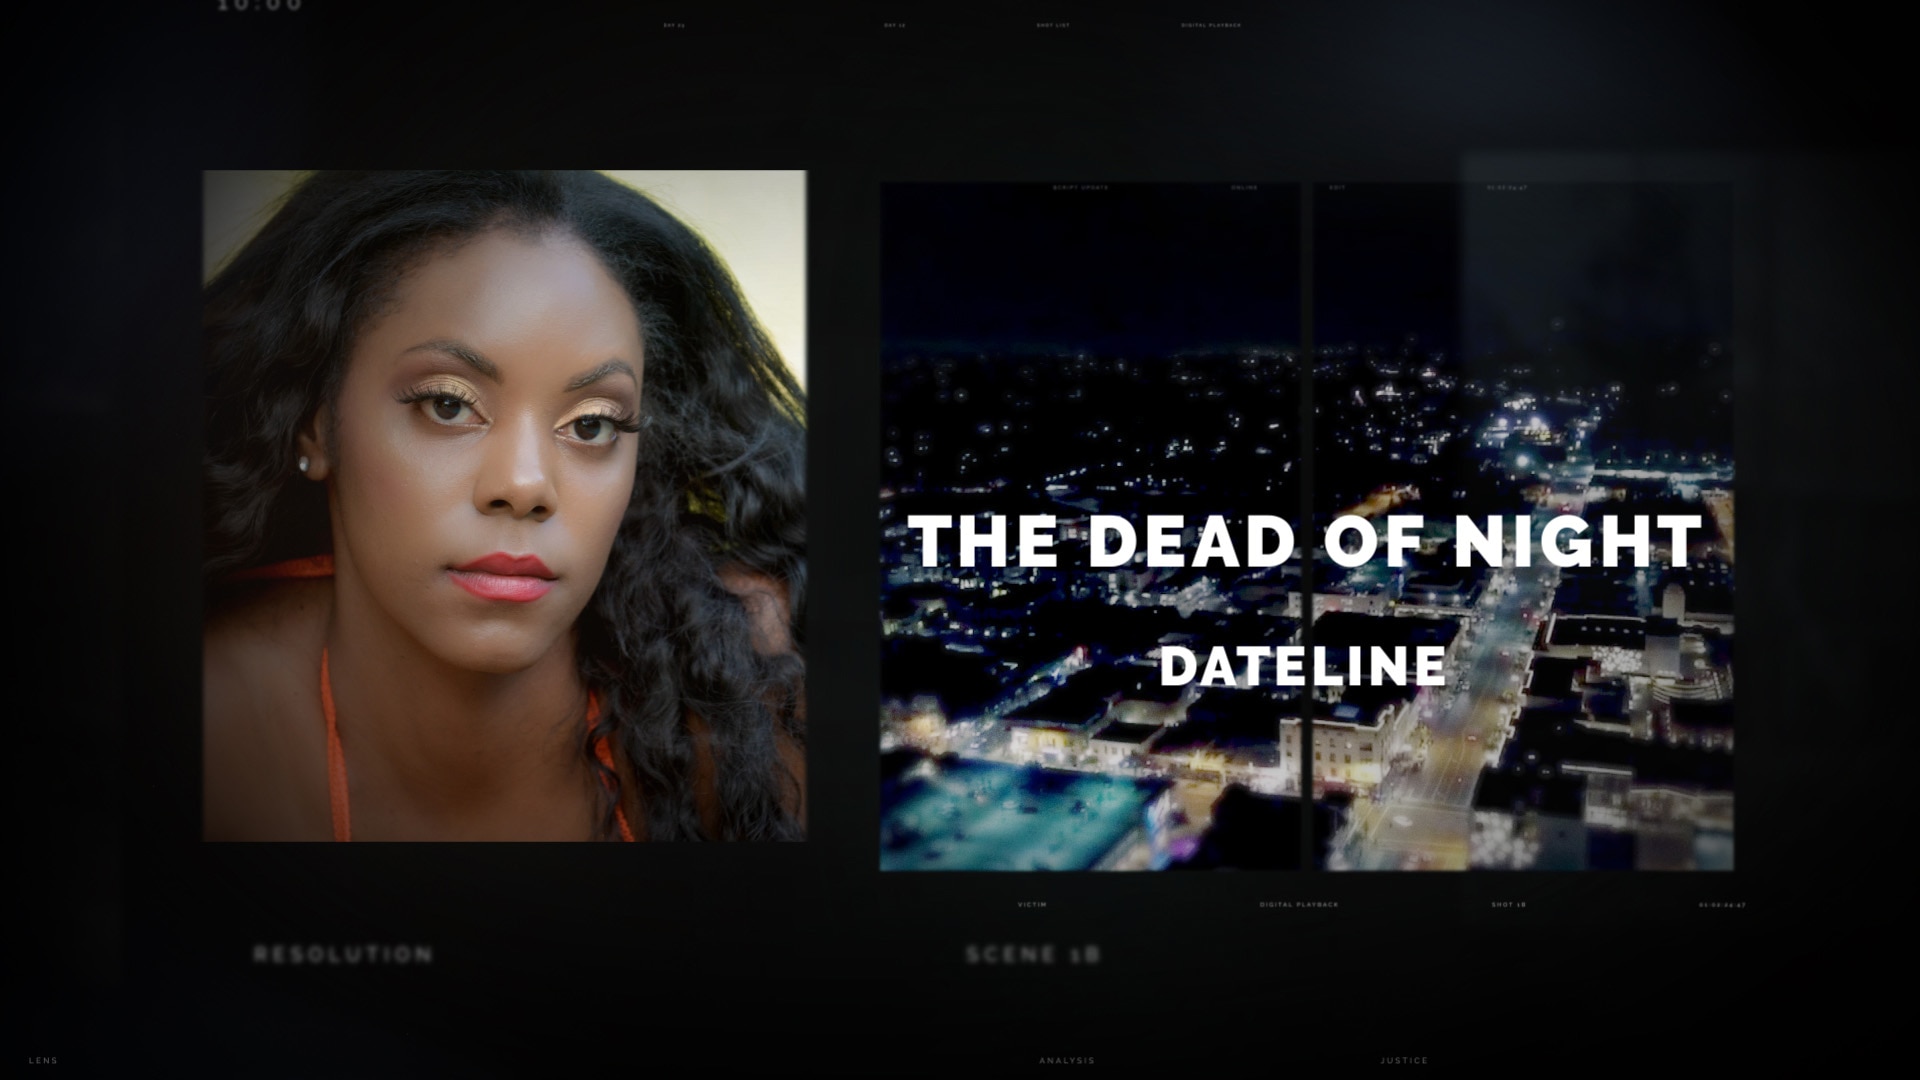 Watch Dateline Episode: The Dead of Night - NBC.com